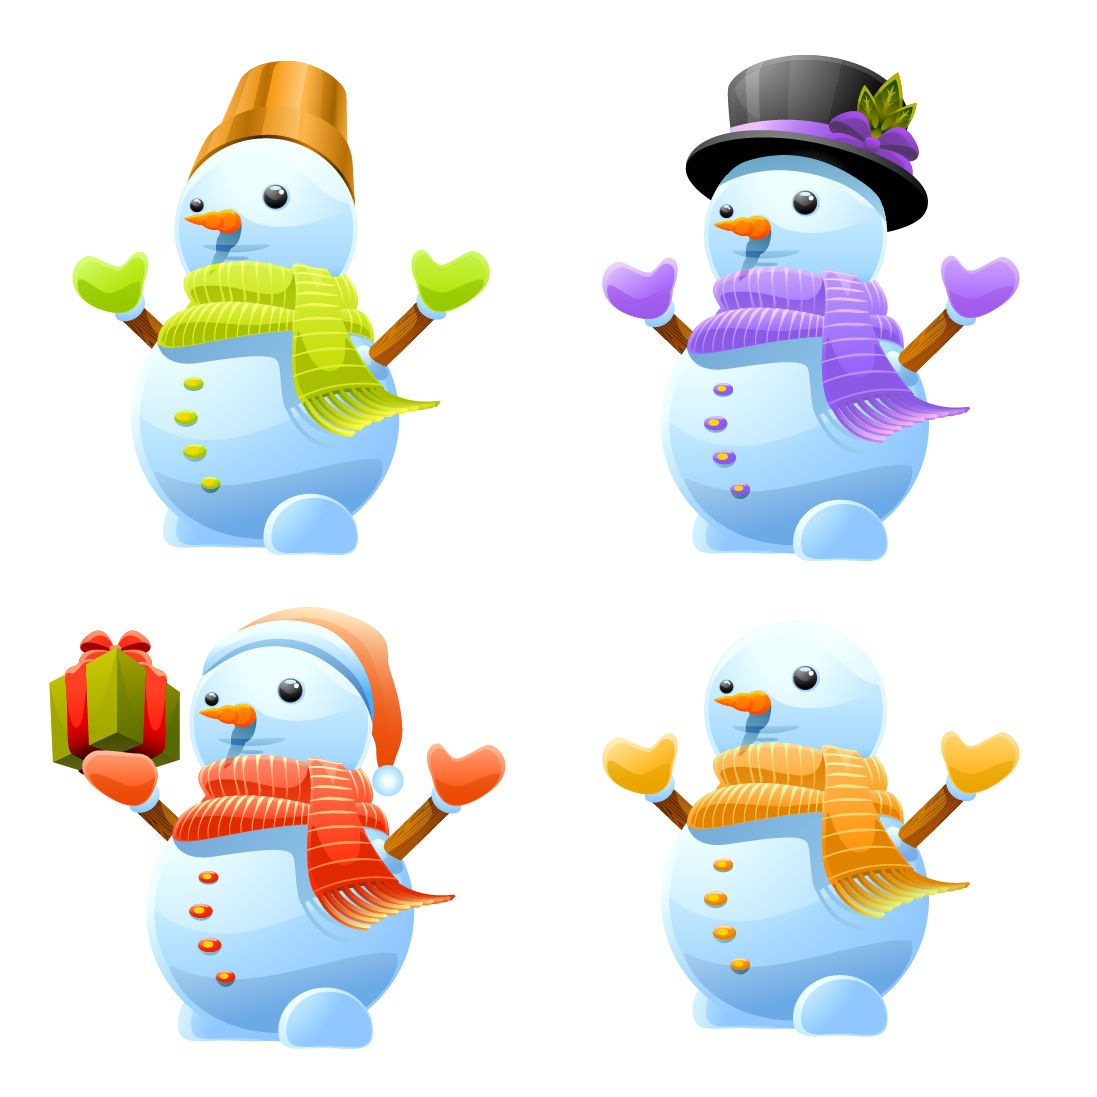 3D Cute Snowman Vector Set | Free Vector Graphics | All Free Web ...